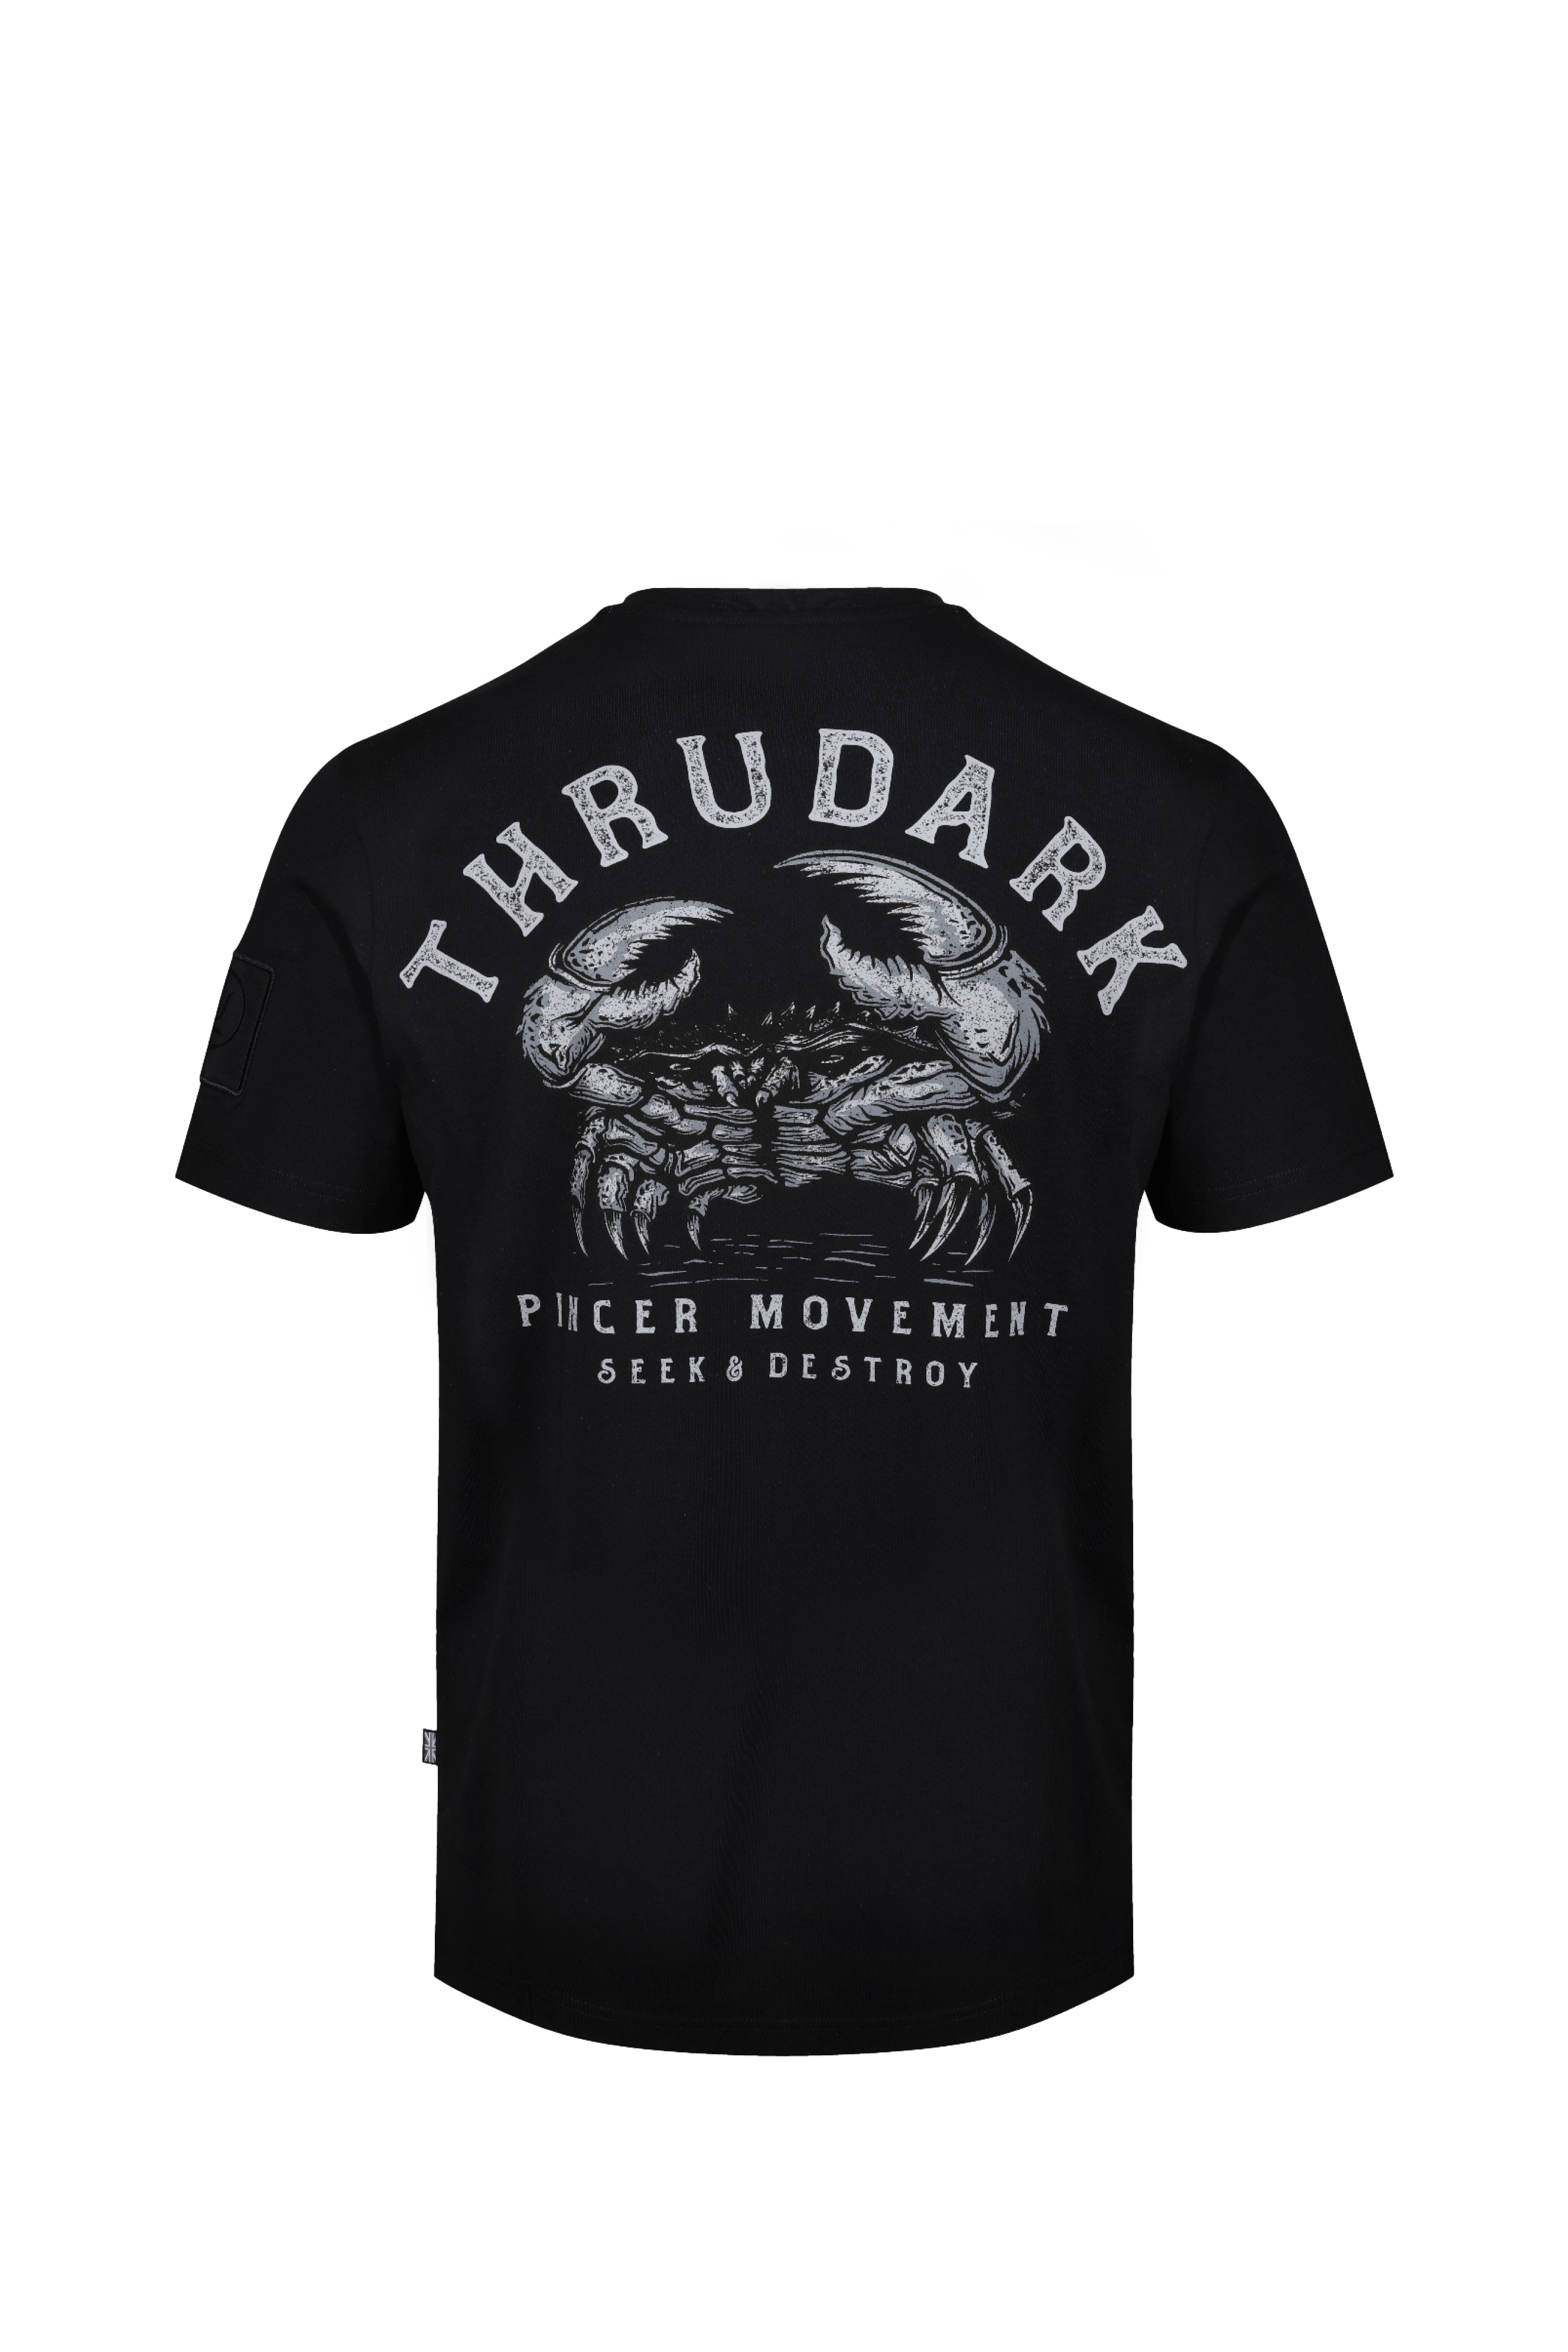 Thrudark  Insignia T-shirt - Pincer Movement Xl